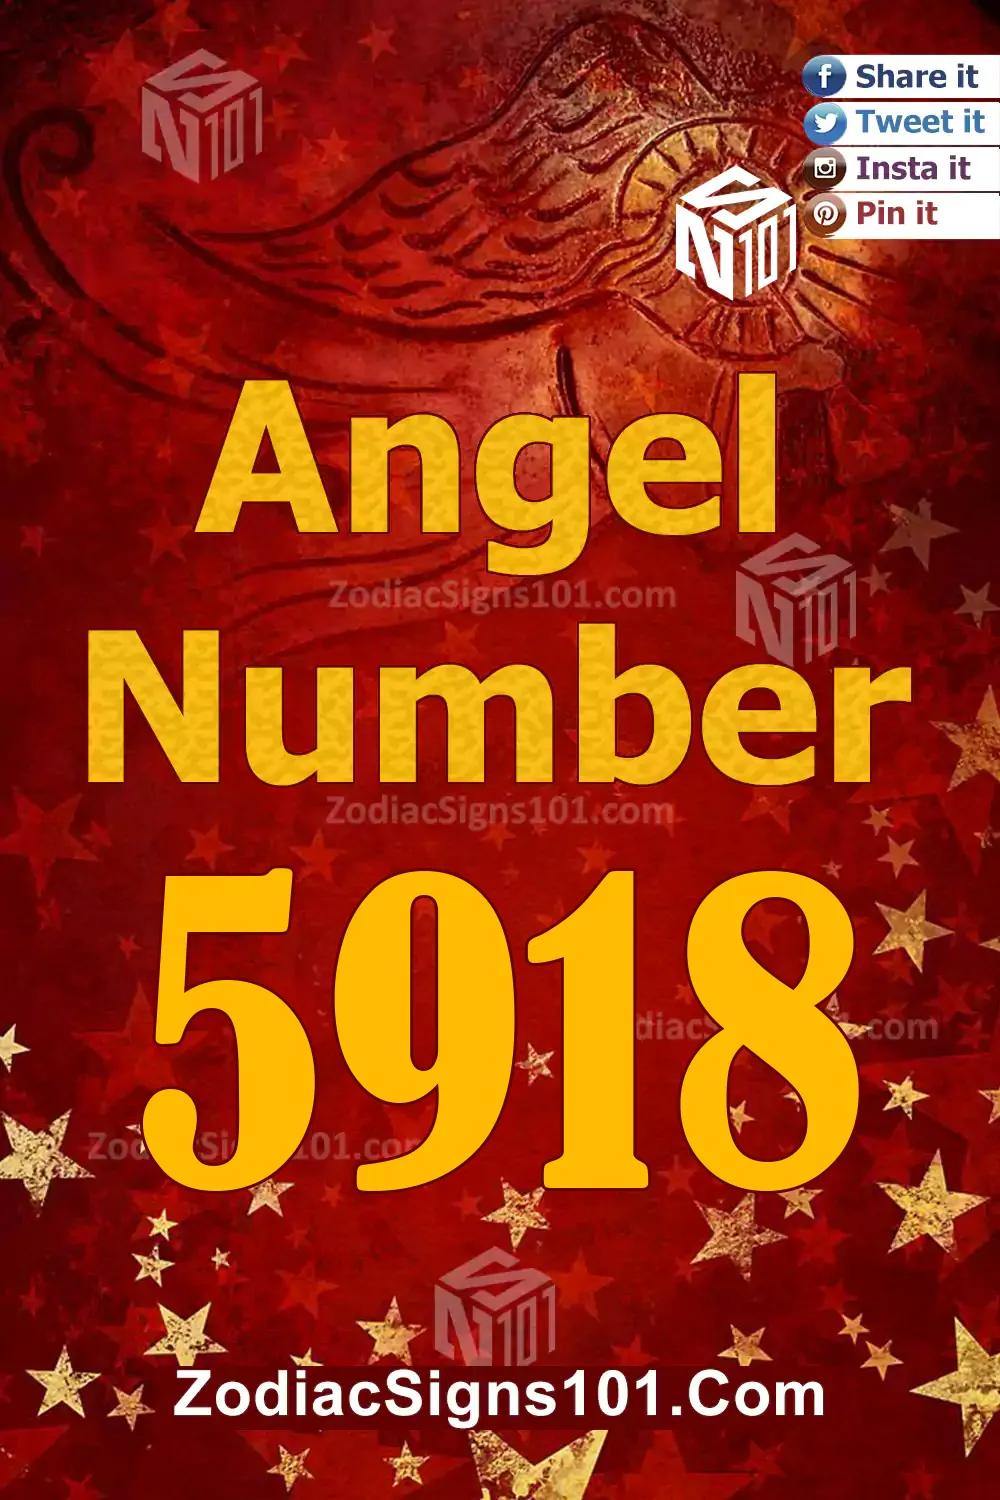 5918-Angel-Number-Meaning.jpg